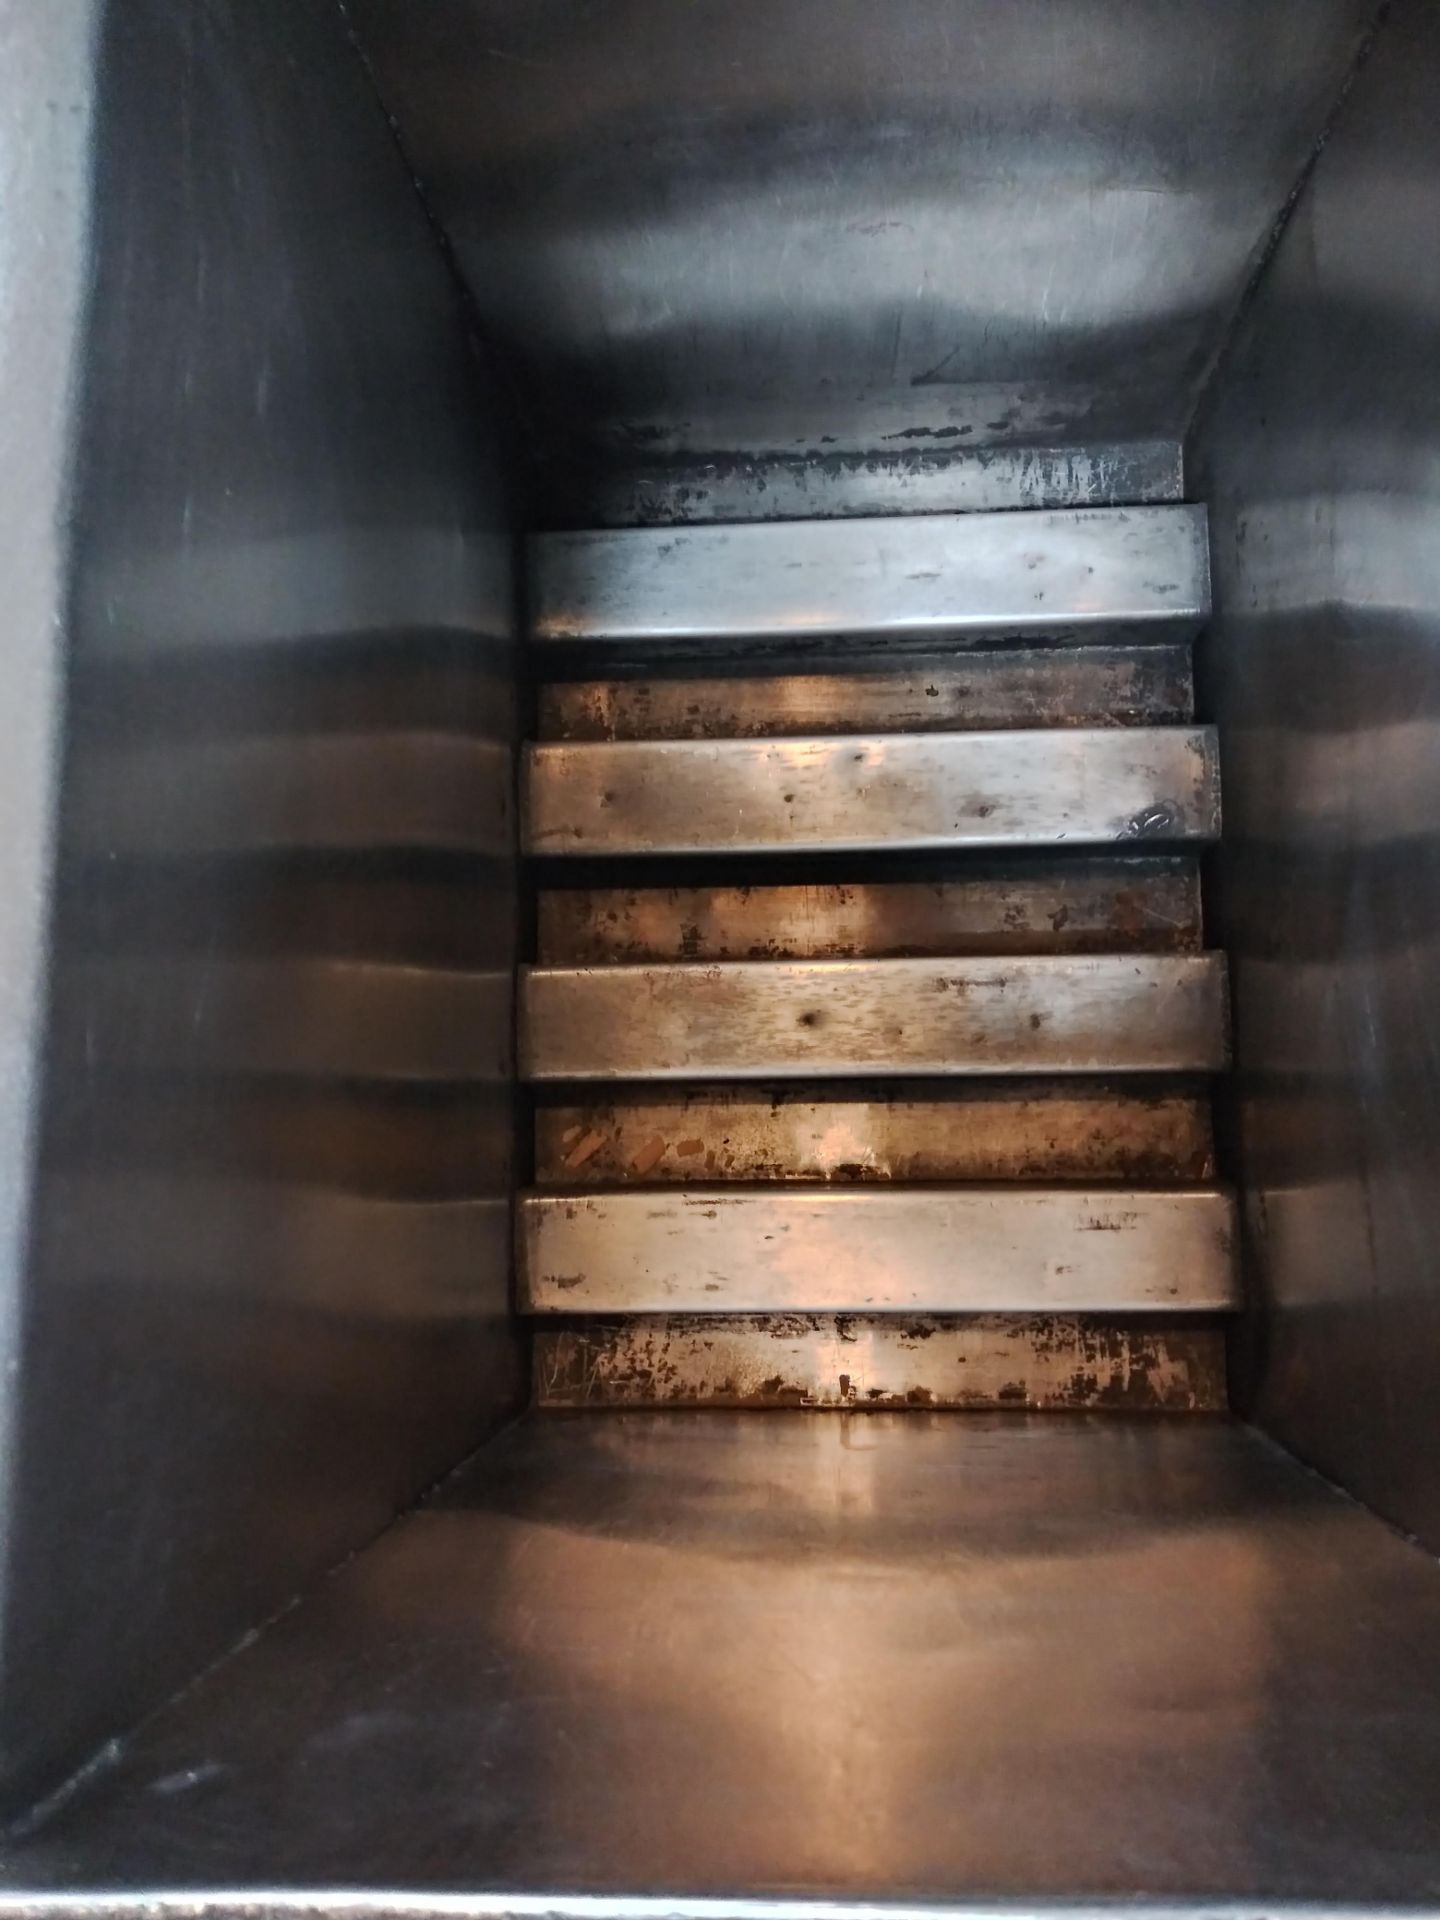 Stainless Steel Gas Deep Fryer 14" X 9" X 14 Deep Tank - Image 3 of 3